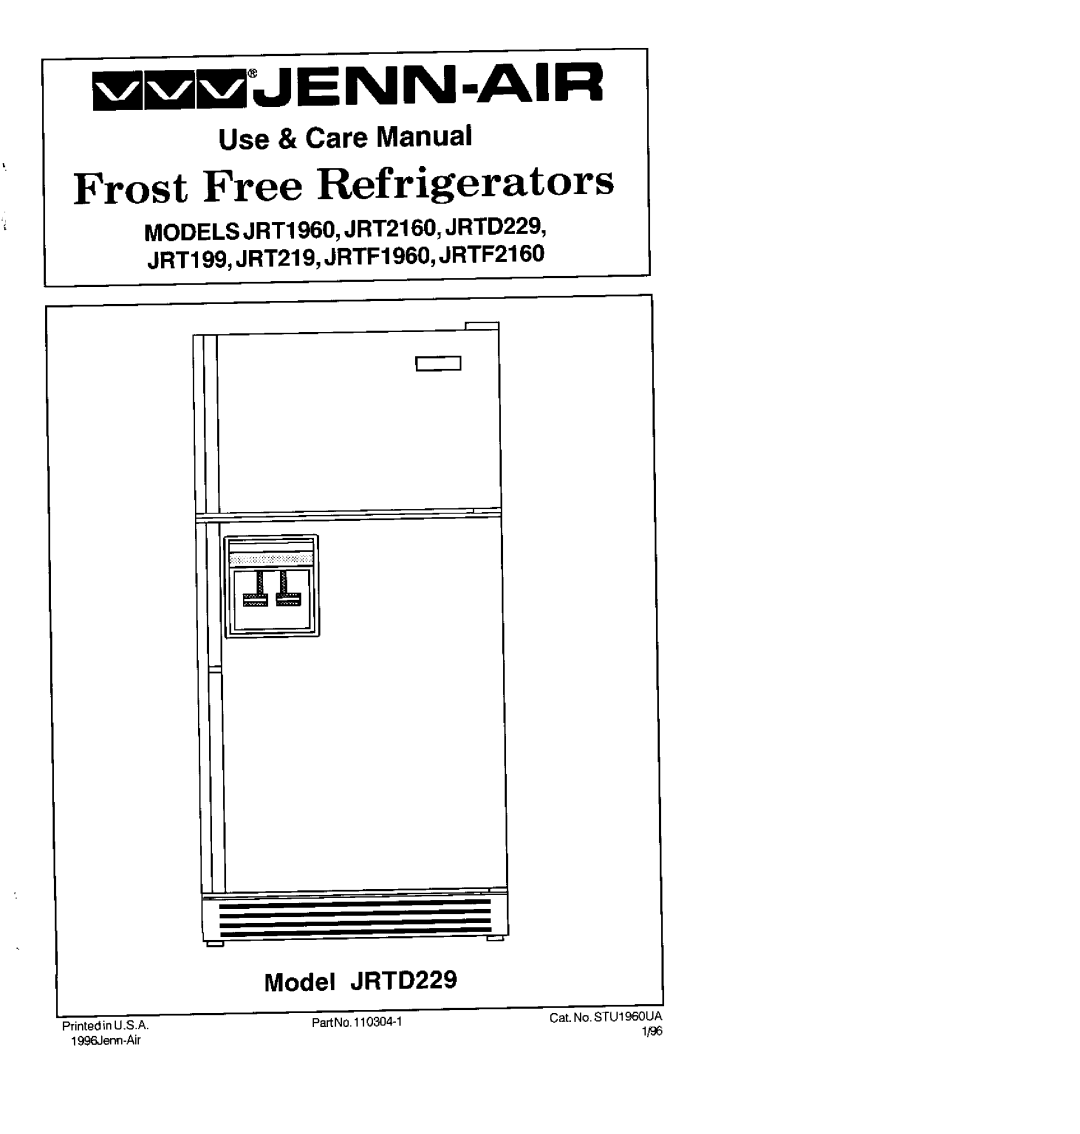 Jenn-Air JRT219 manual MODELSJRT1960,JRT2160,JRTD229, Model JRTD229, mJENN.AIR, Frost Free Refrigerators, PartNo, 1/g6 